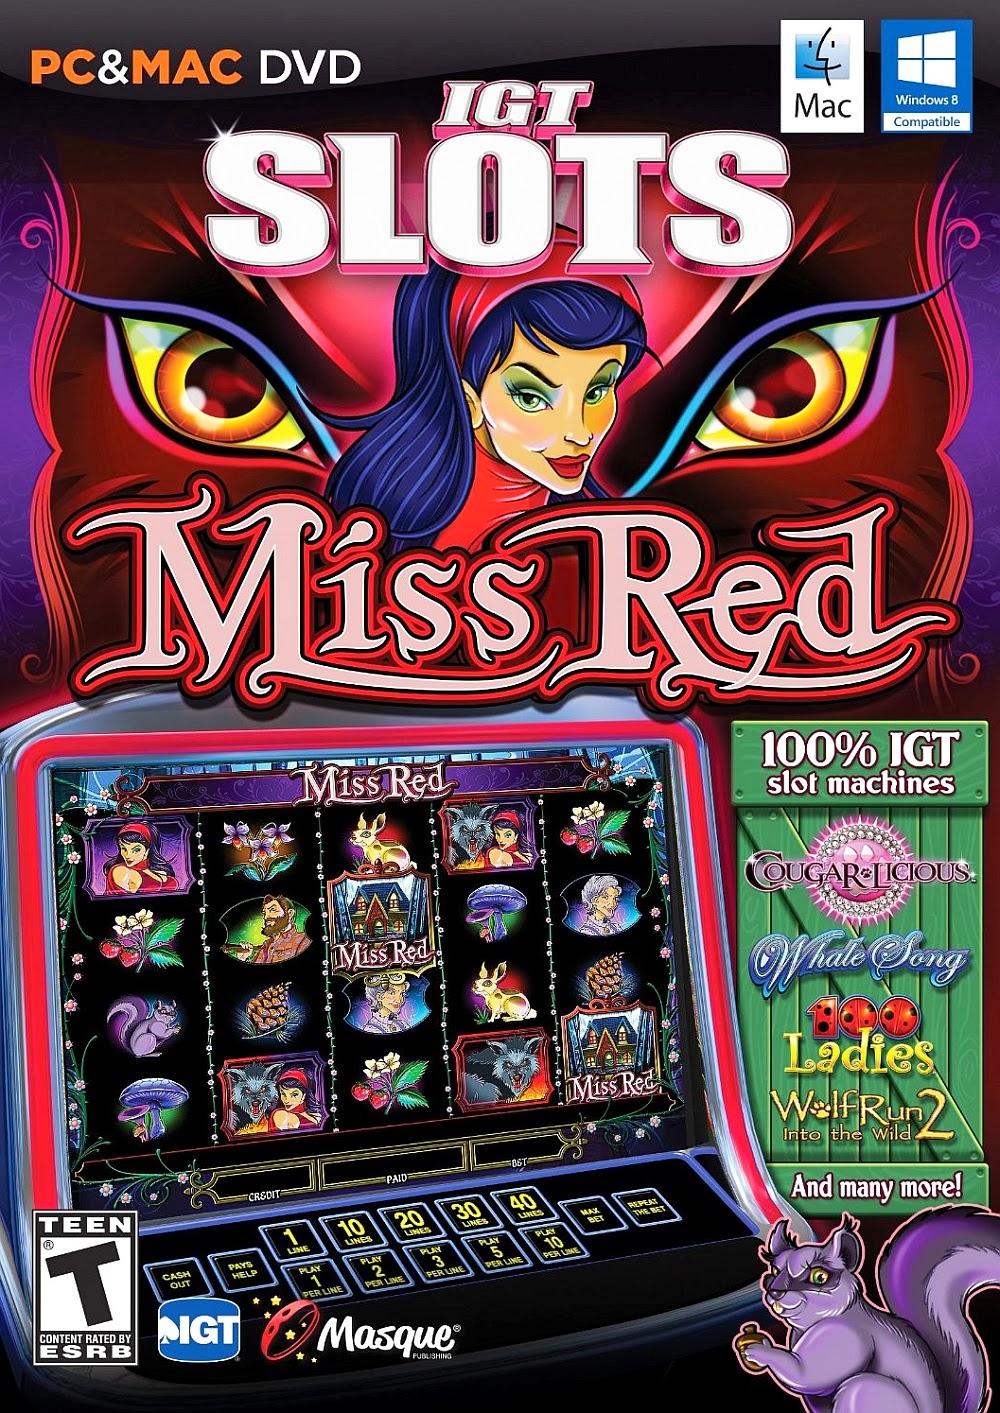 Free Game Slot Machines